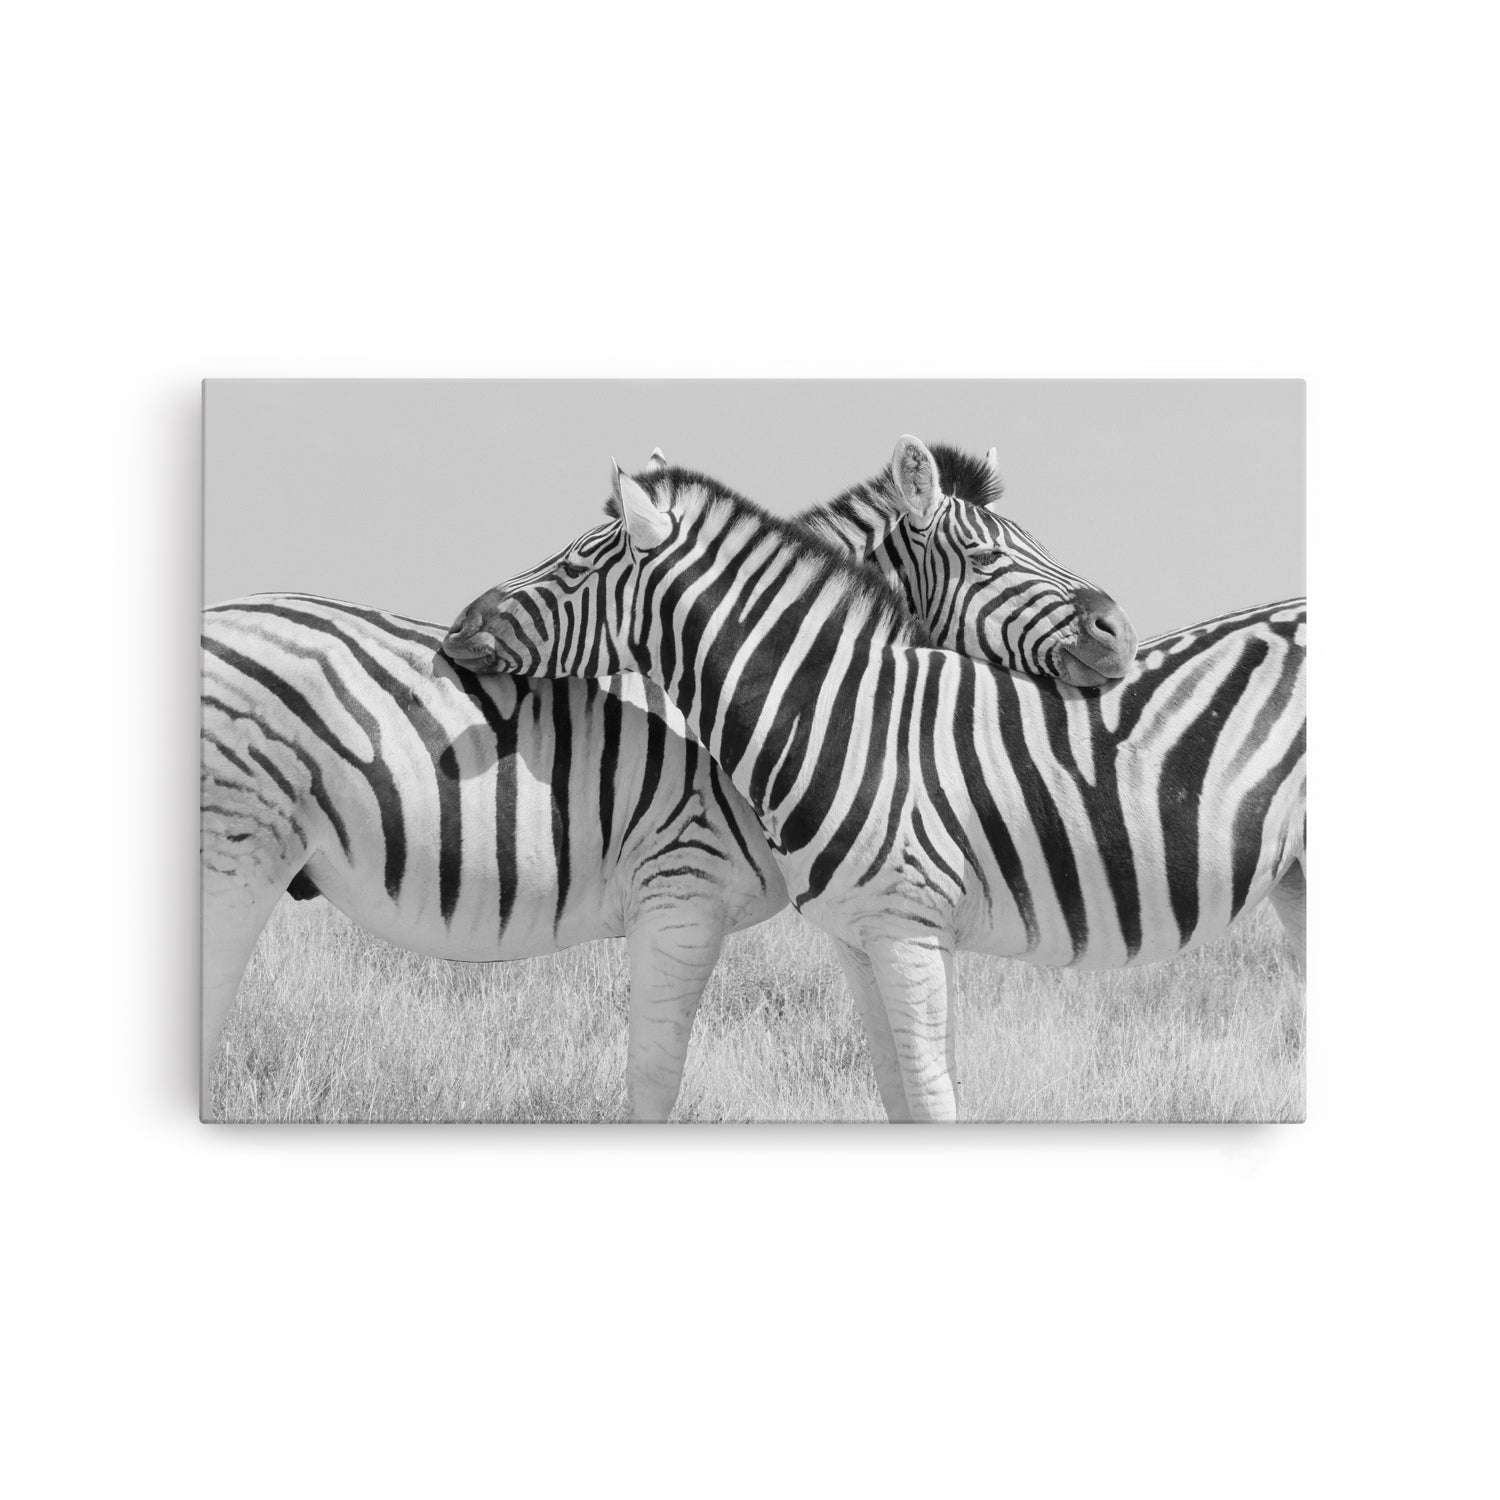 Symmetrical Zebras